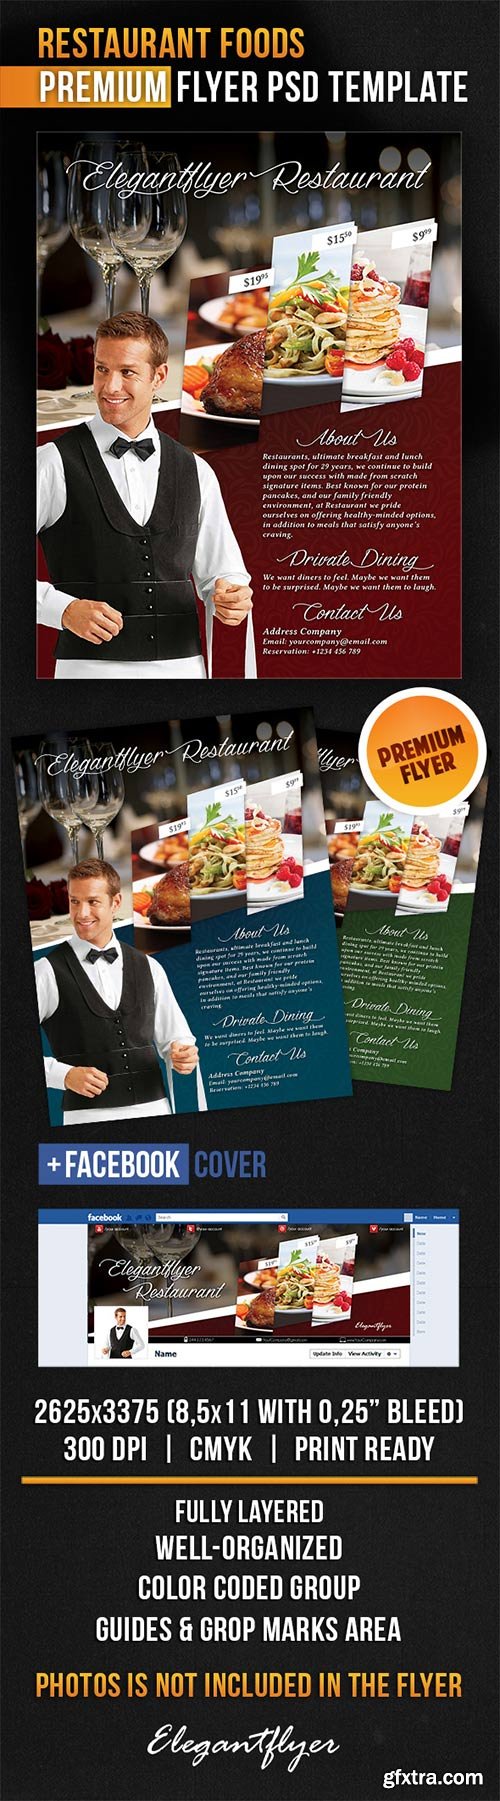 Restaurant Foods Flyer PSD Template + Facebook Cover